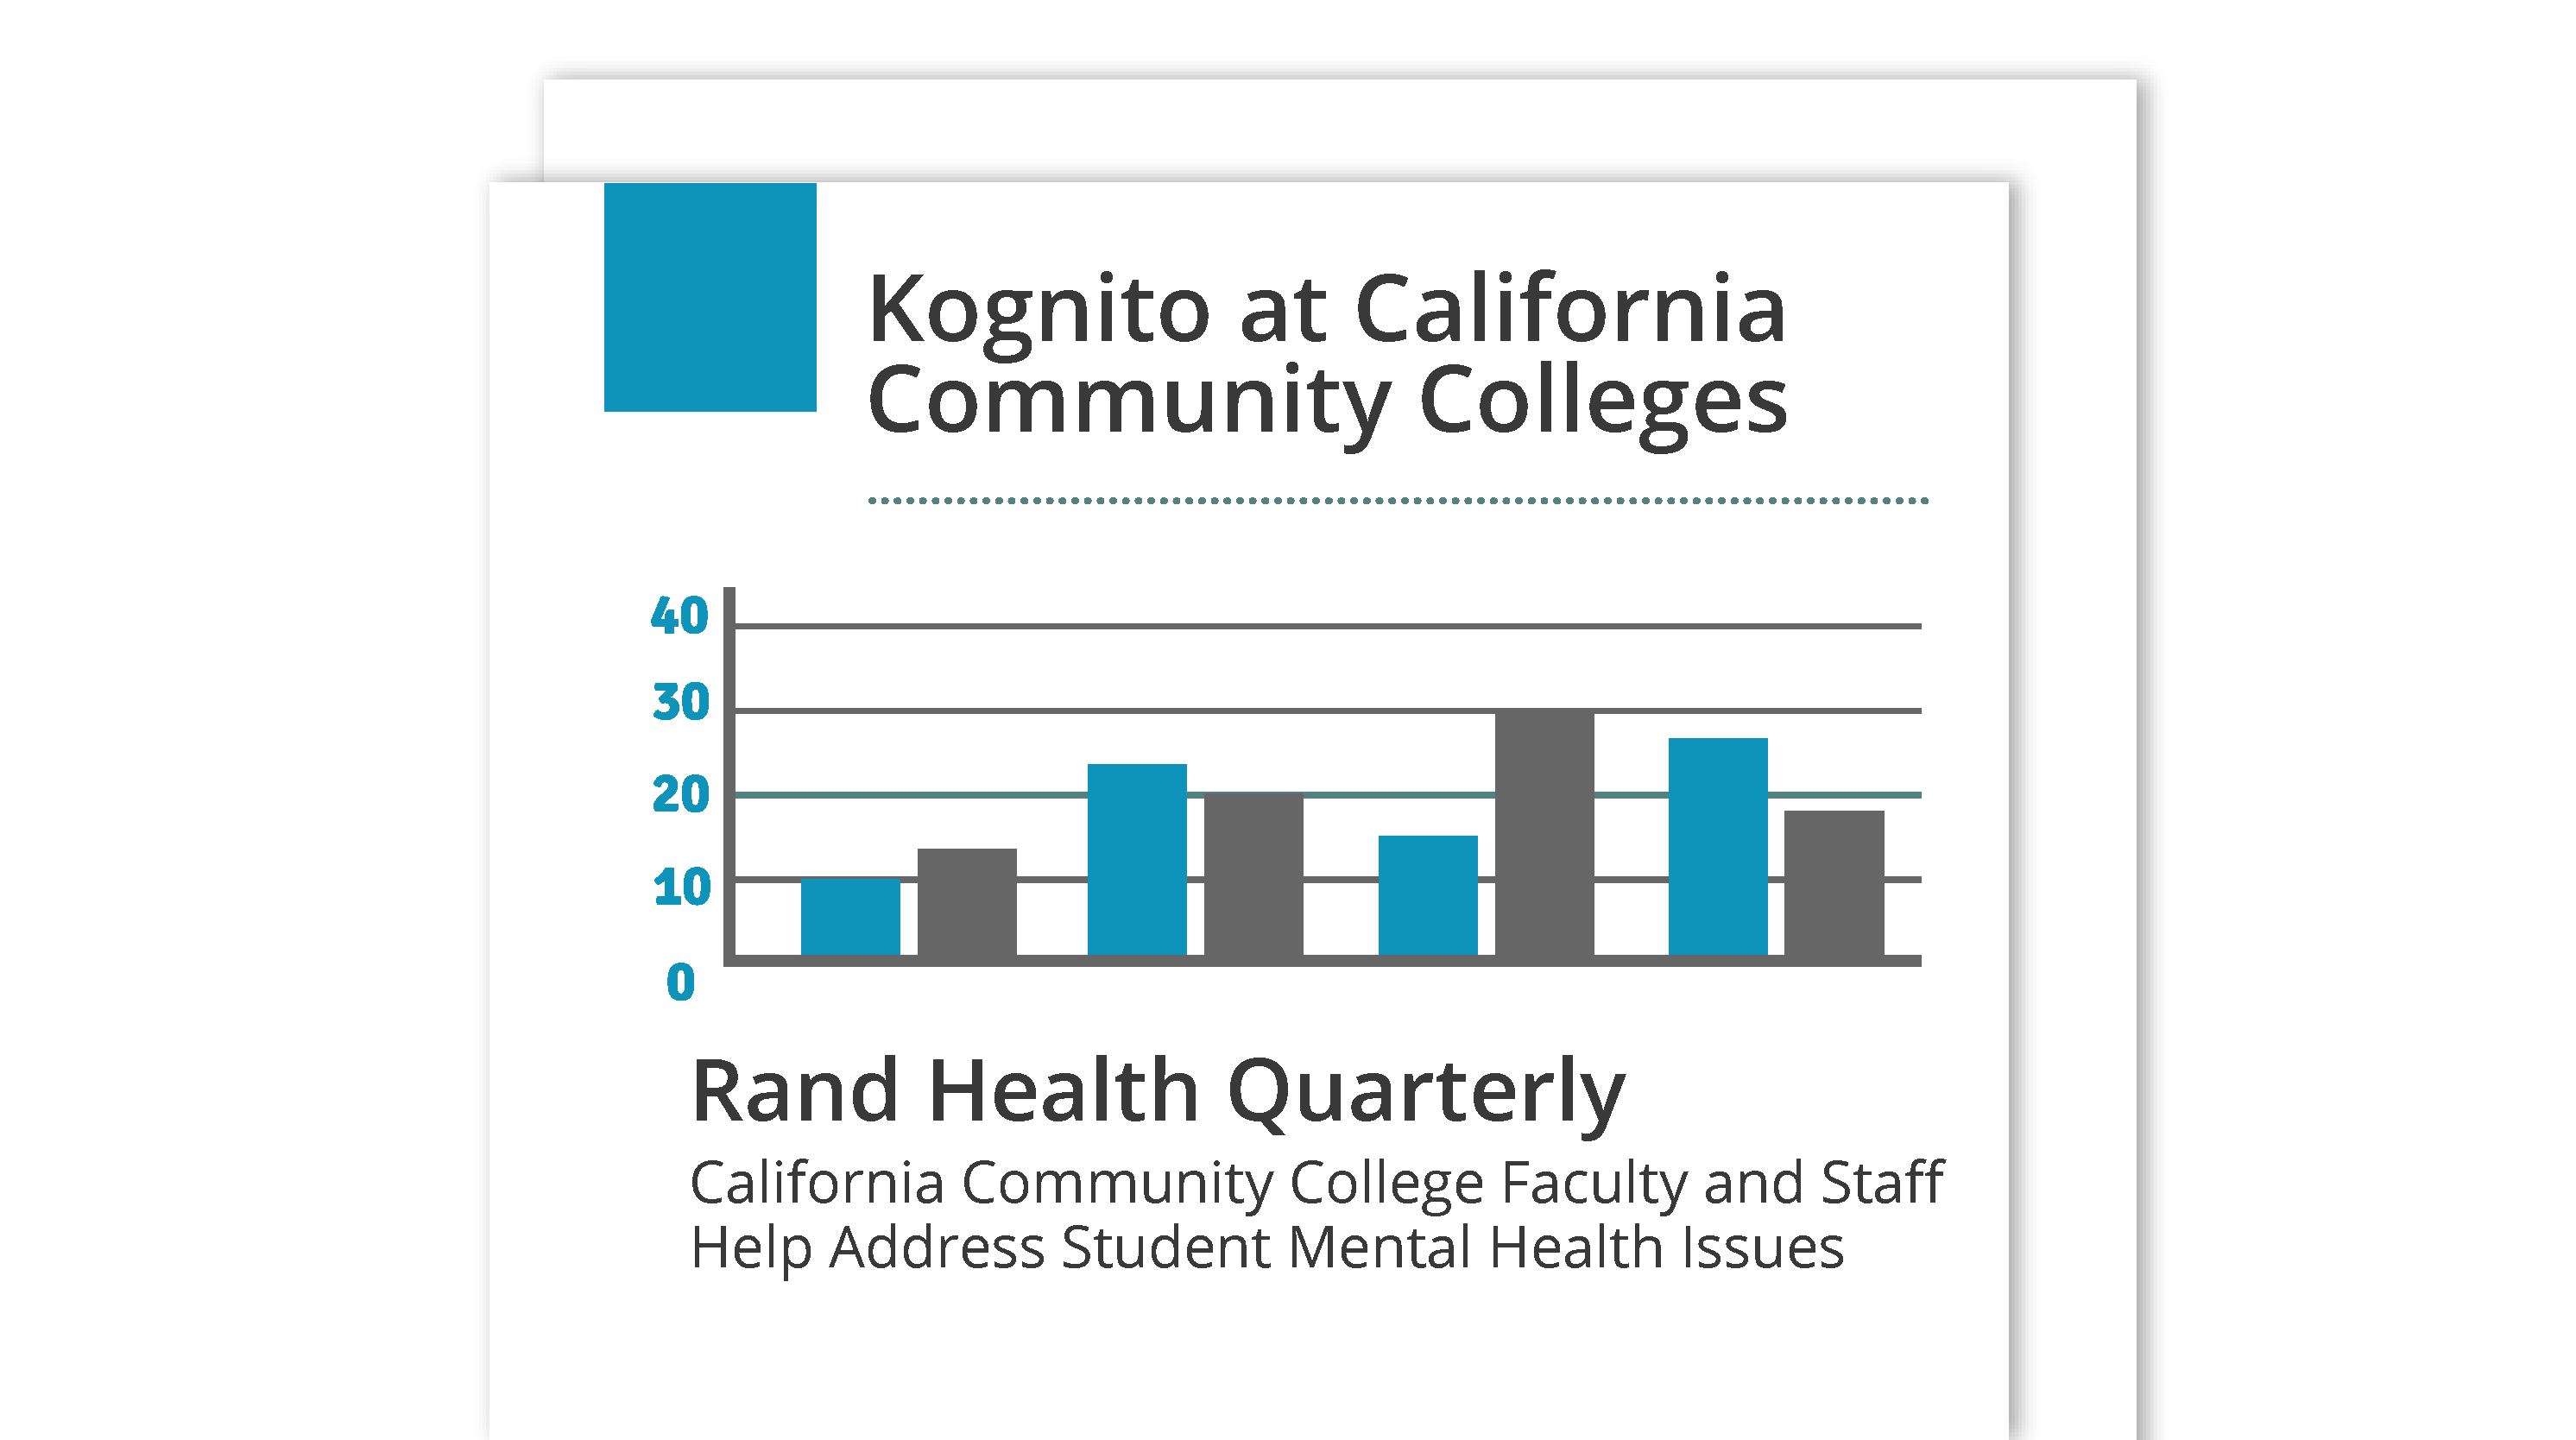 Kognito at California Community Colleges